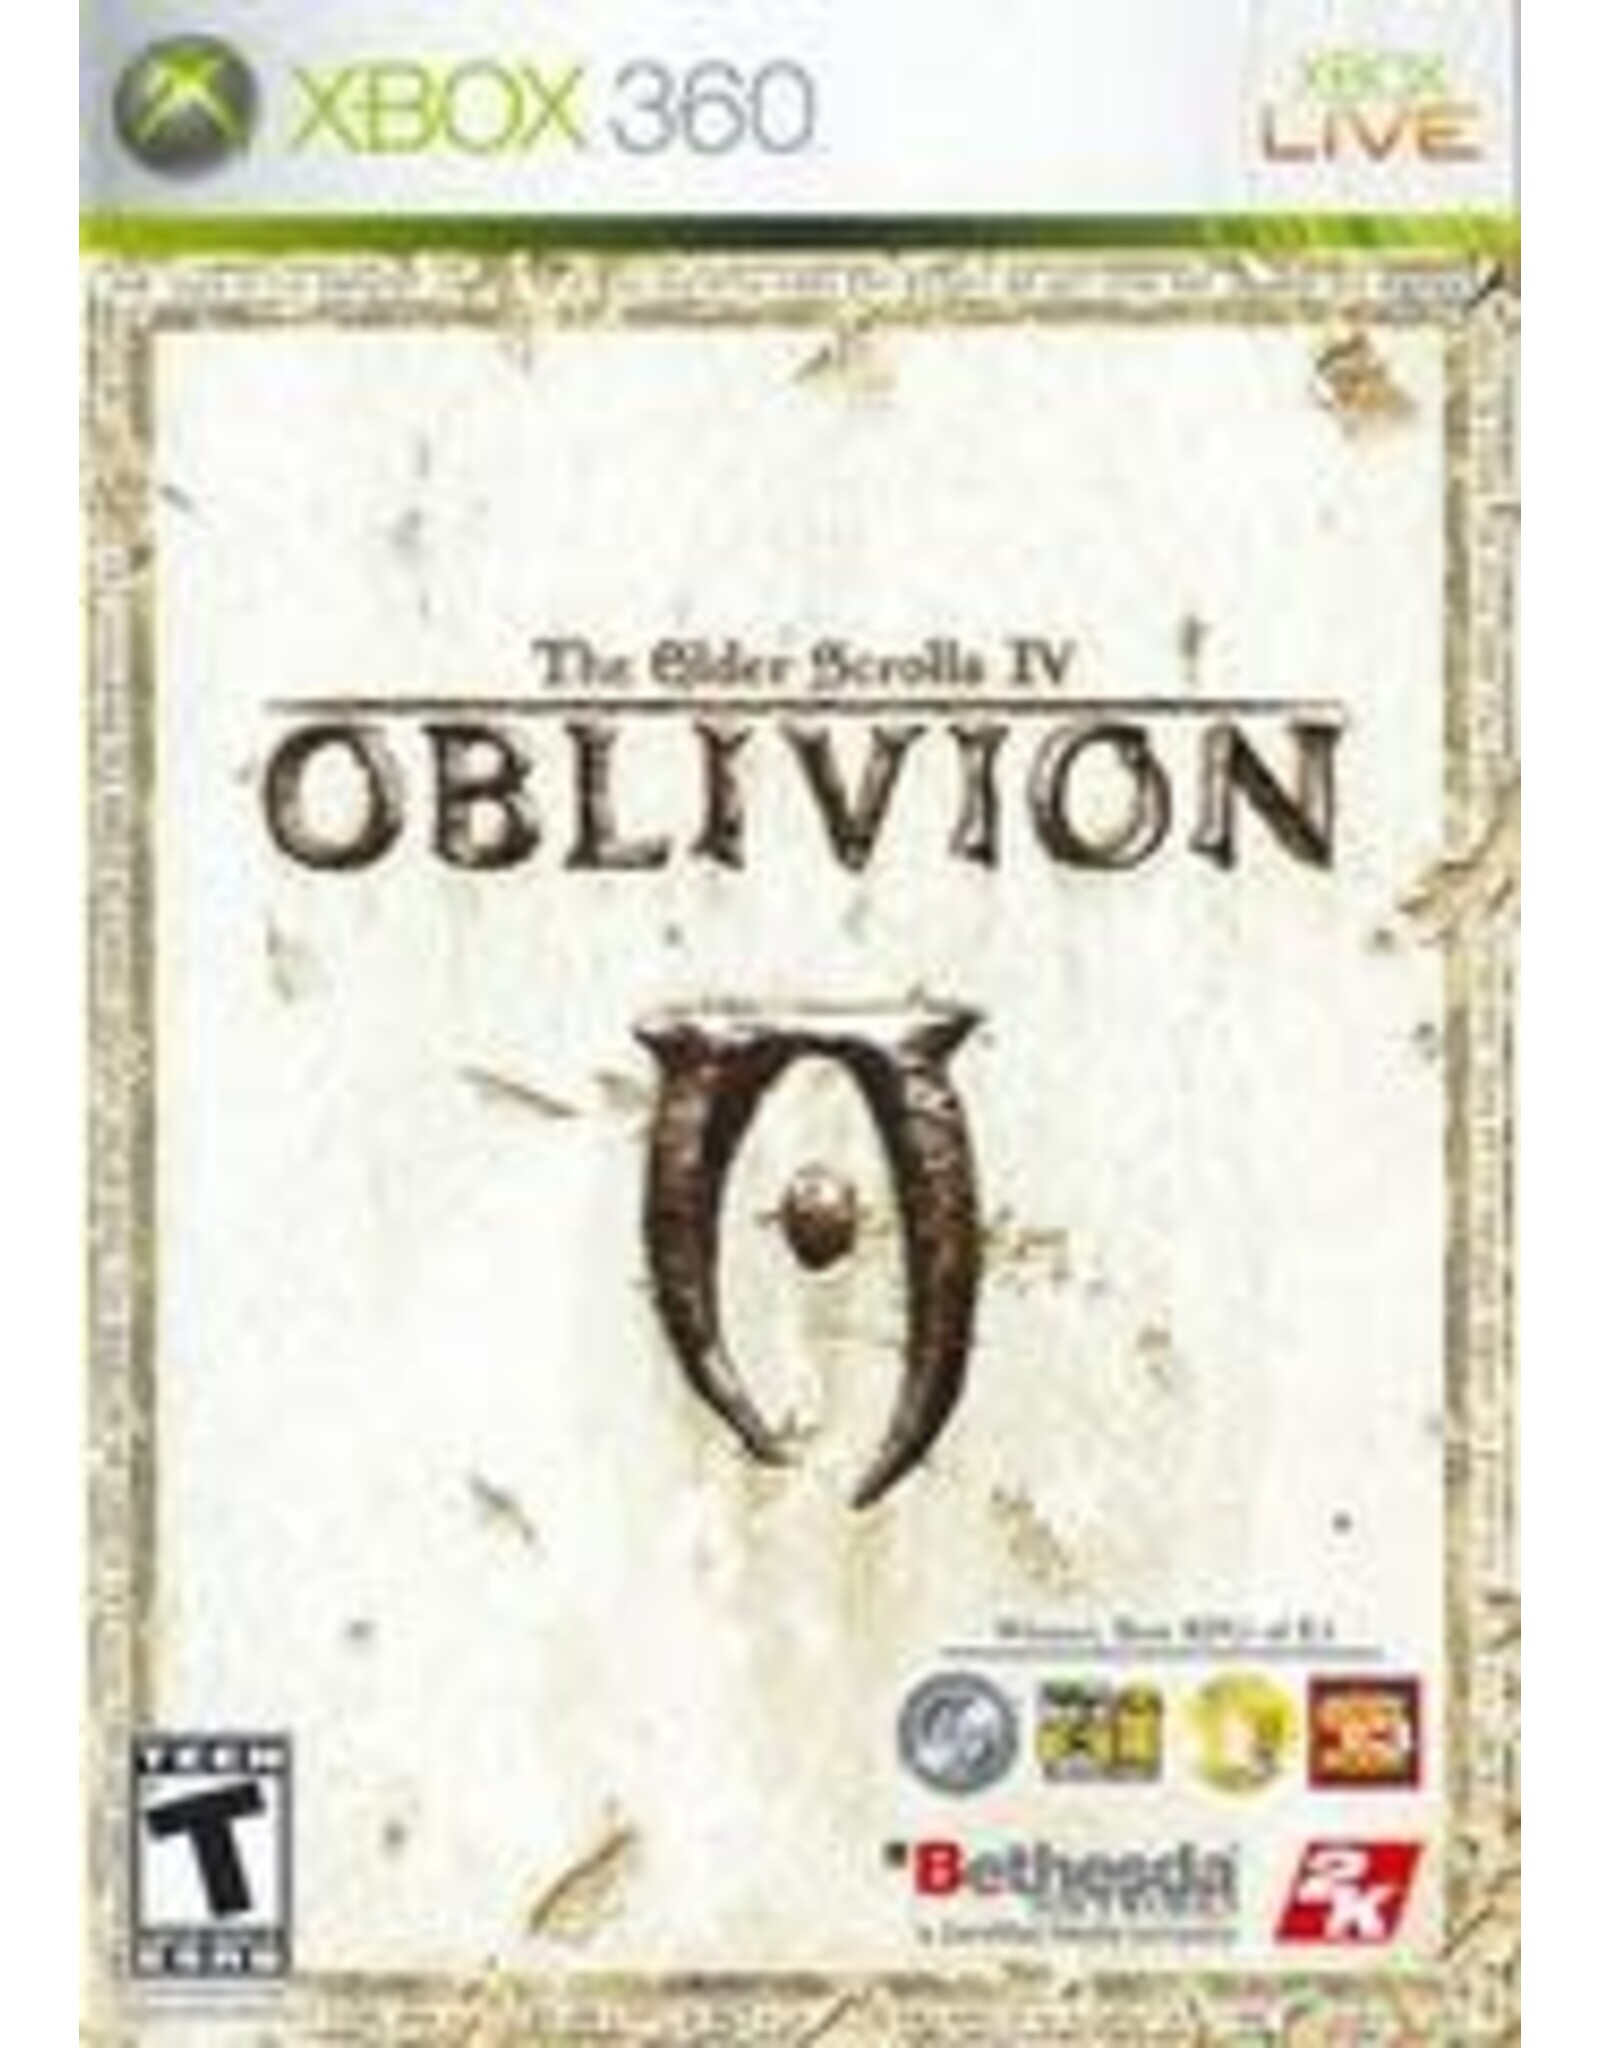 Xbox 360 Oblivion, Elder Scrolls IV (No Manual)